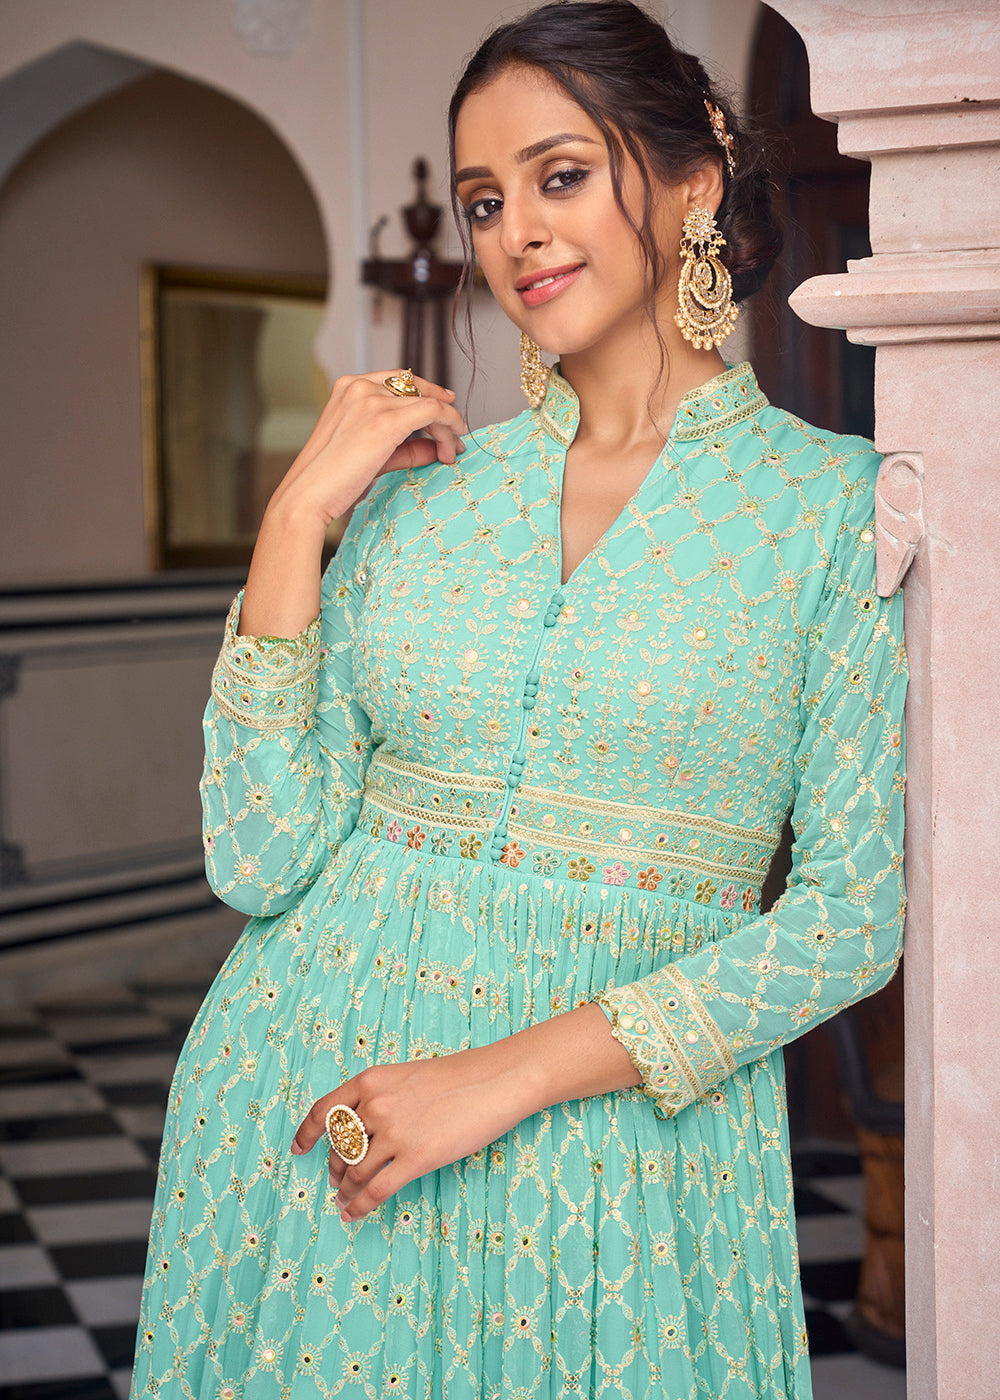 Buy Now Aqua Green Pretty Embellished Work Anarkali Dress Online in USA, UK, Australia, New Zealand, Canada & Worldwide at Empress Clothing.